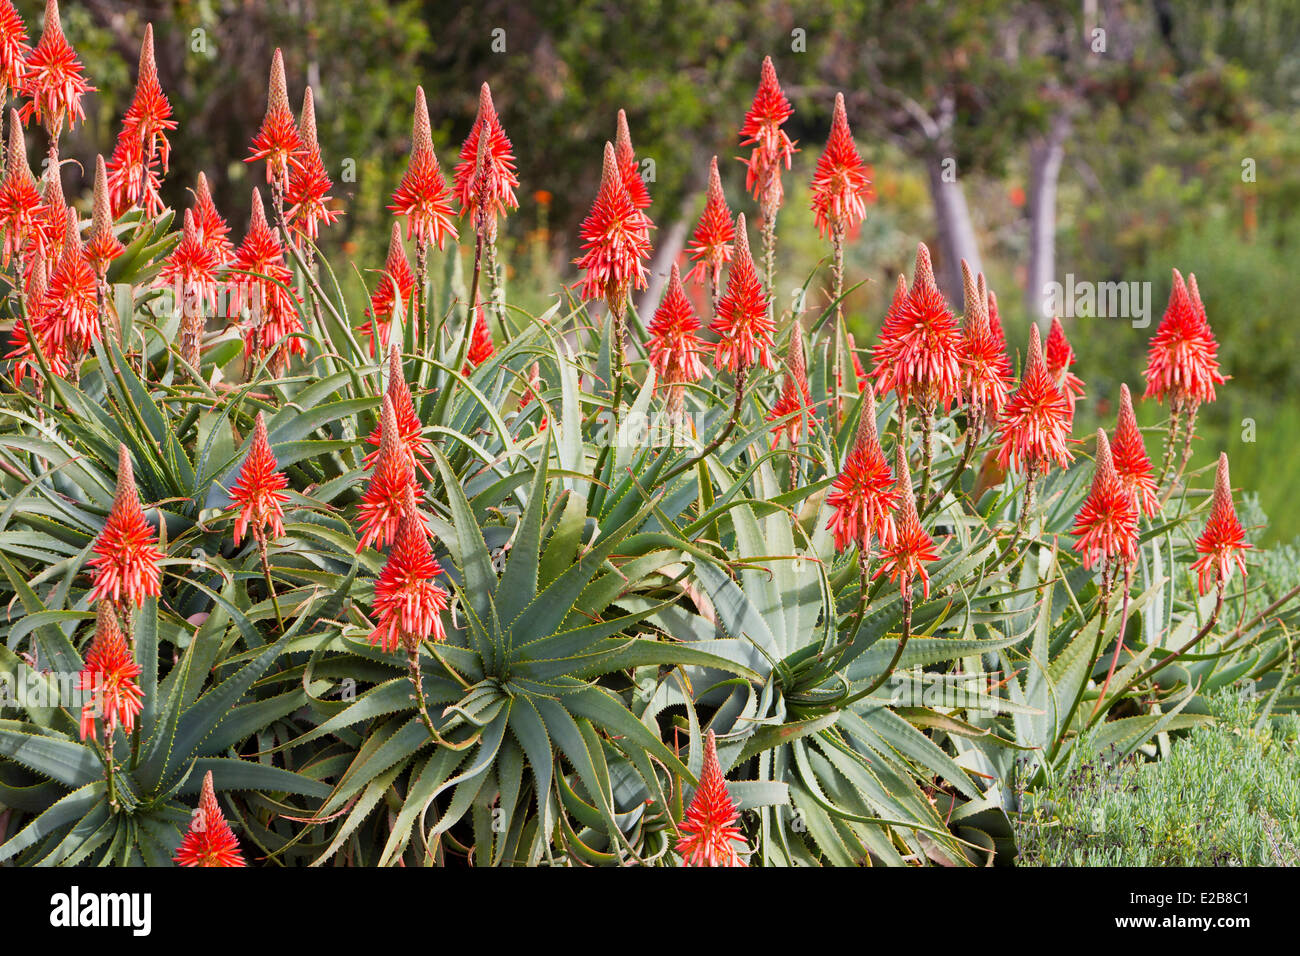 South Africa, Western Cape, Cape Town, Kirstenbosch National Botanical Garden, Krantz Aloe (Aloe arborescens), multi stemmed Stock Photo